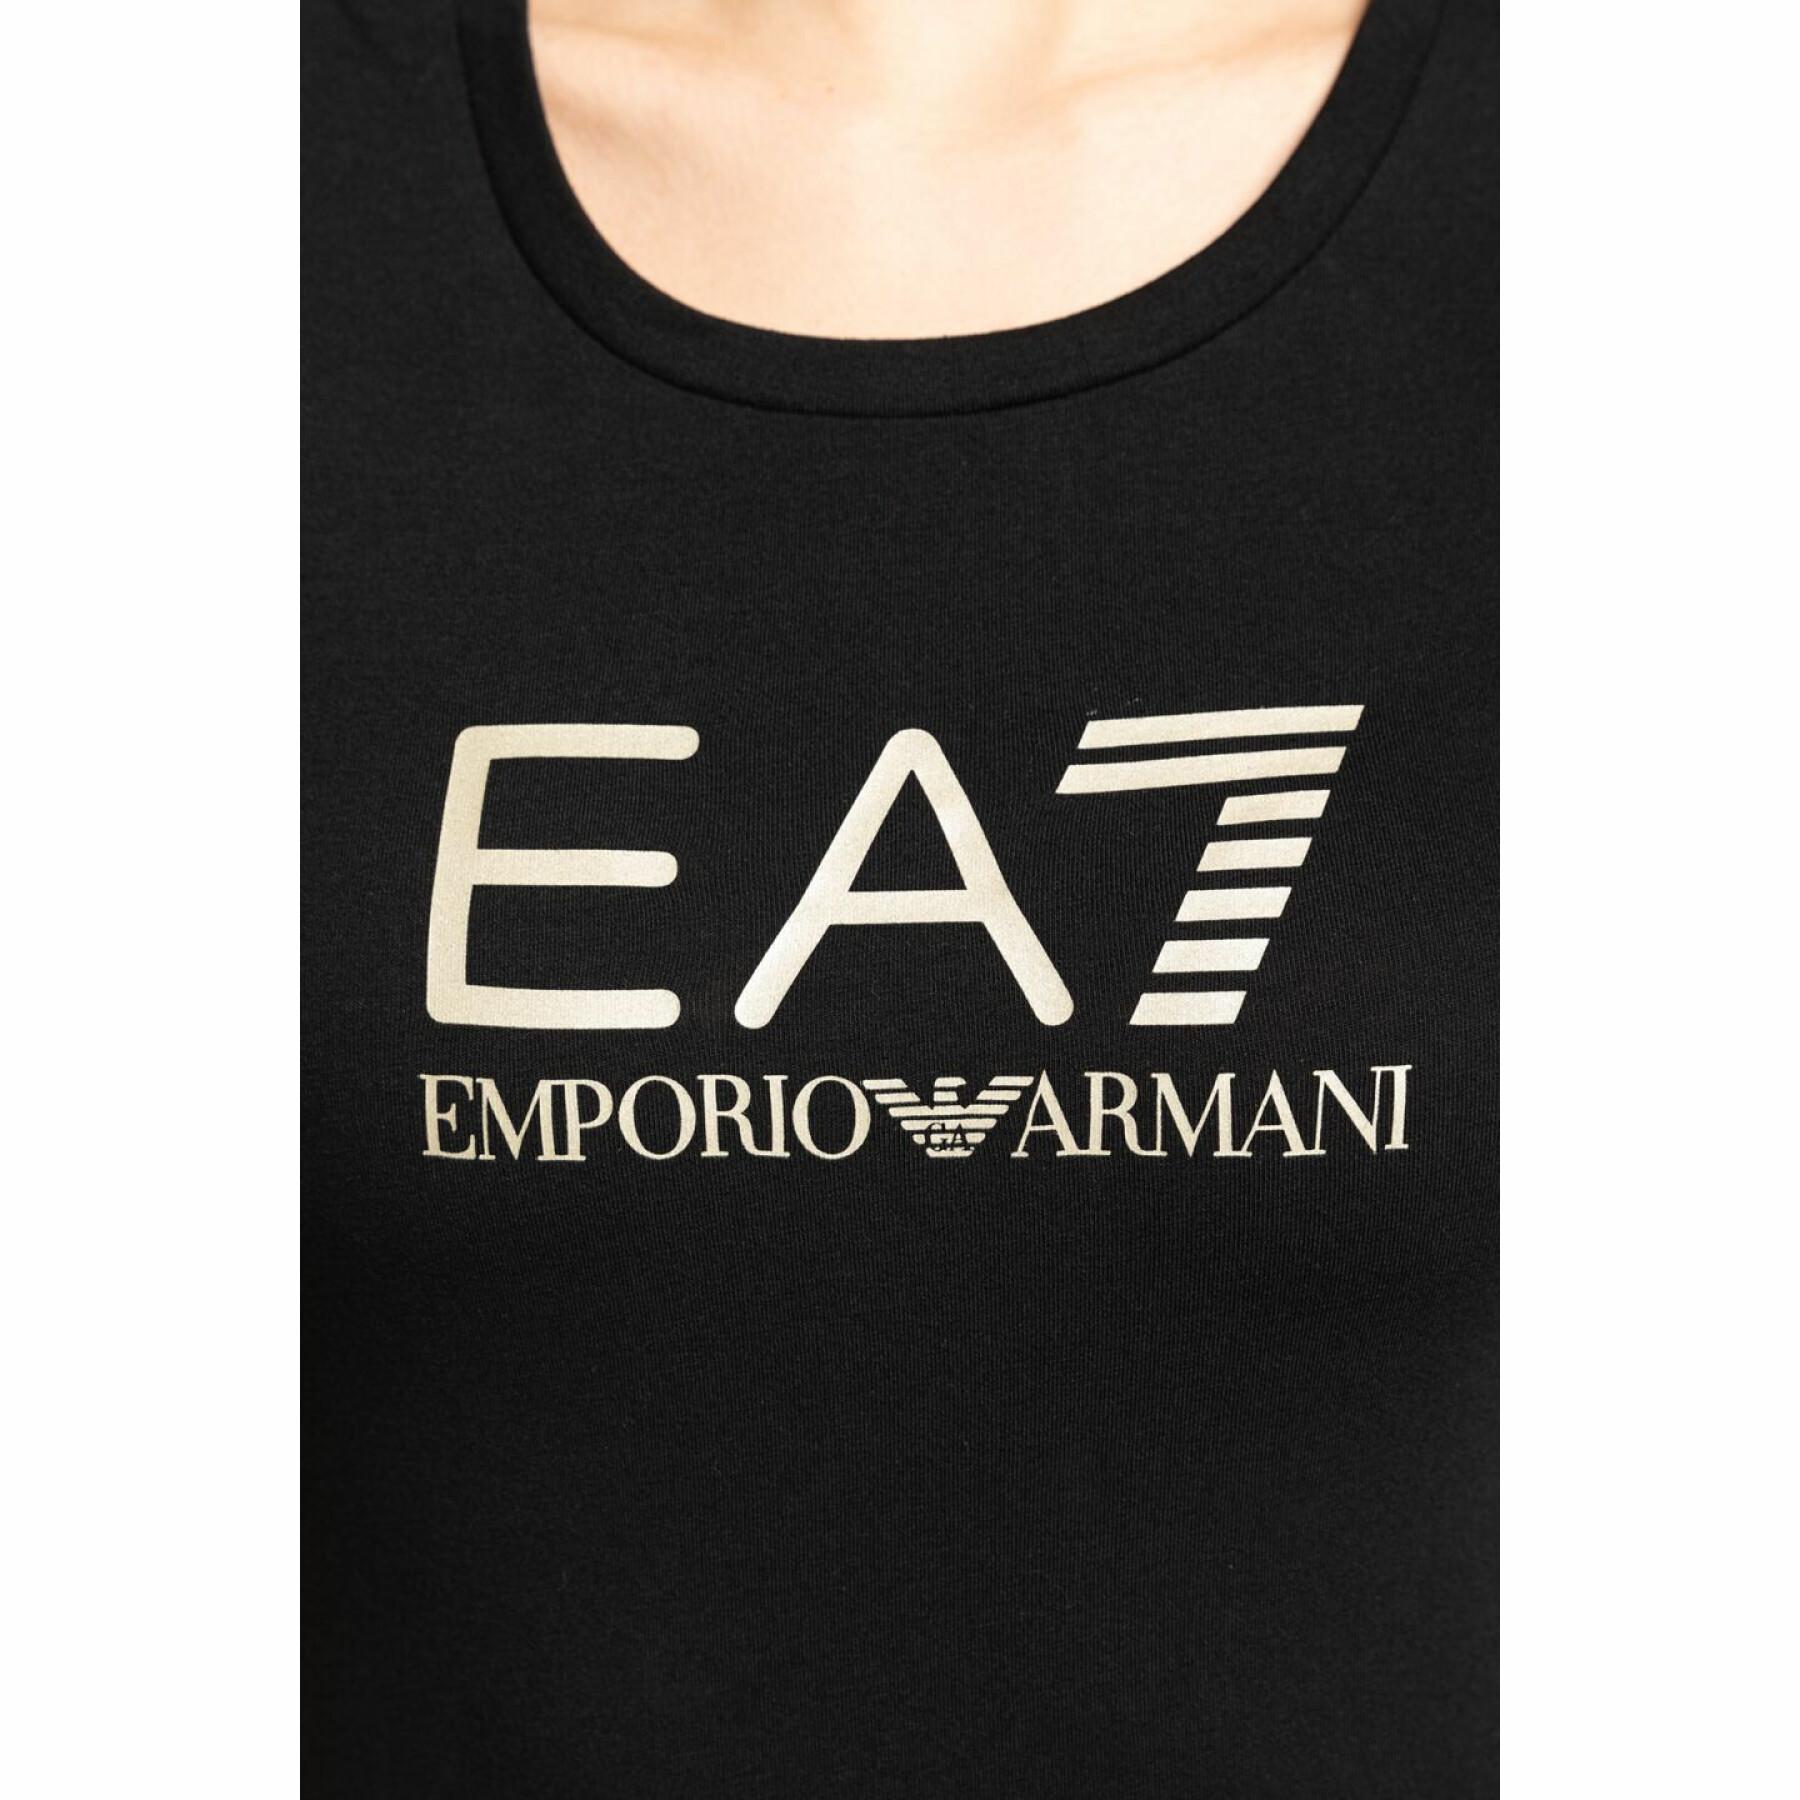 Camiseta feminina EA7 Emporio Armani